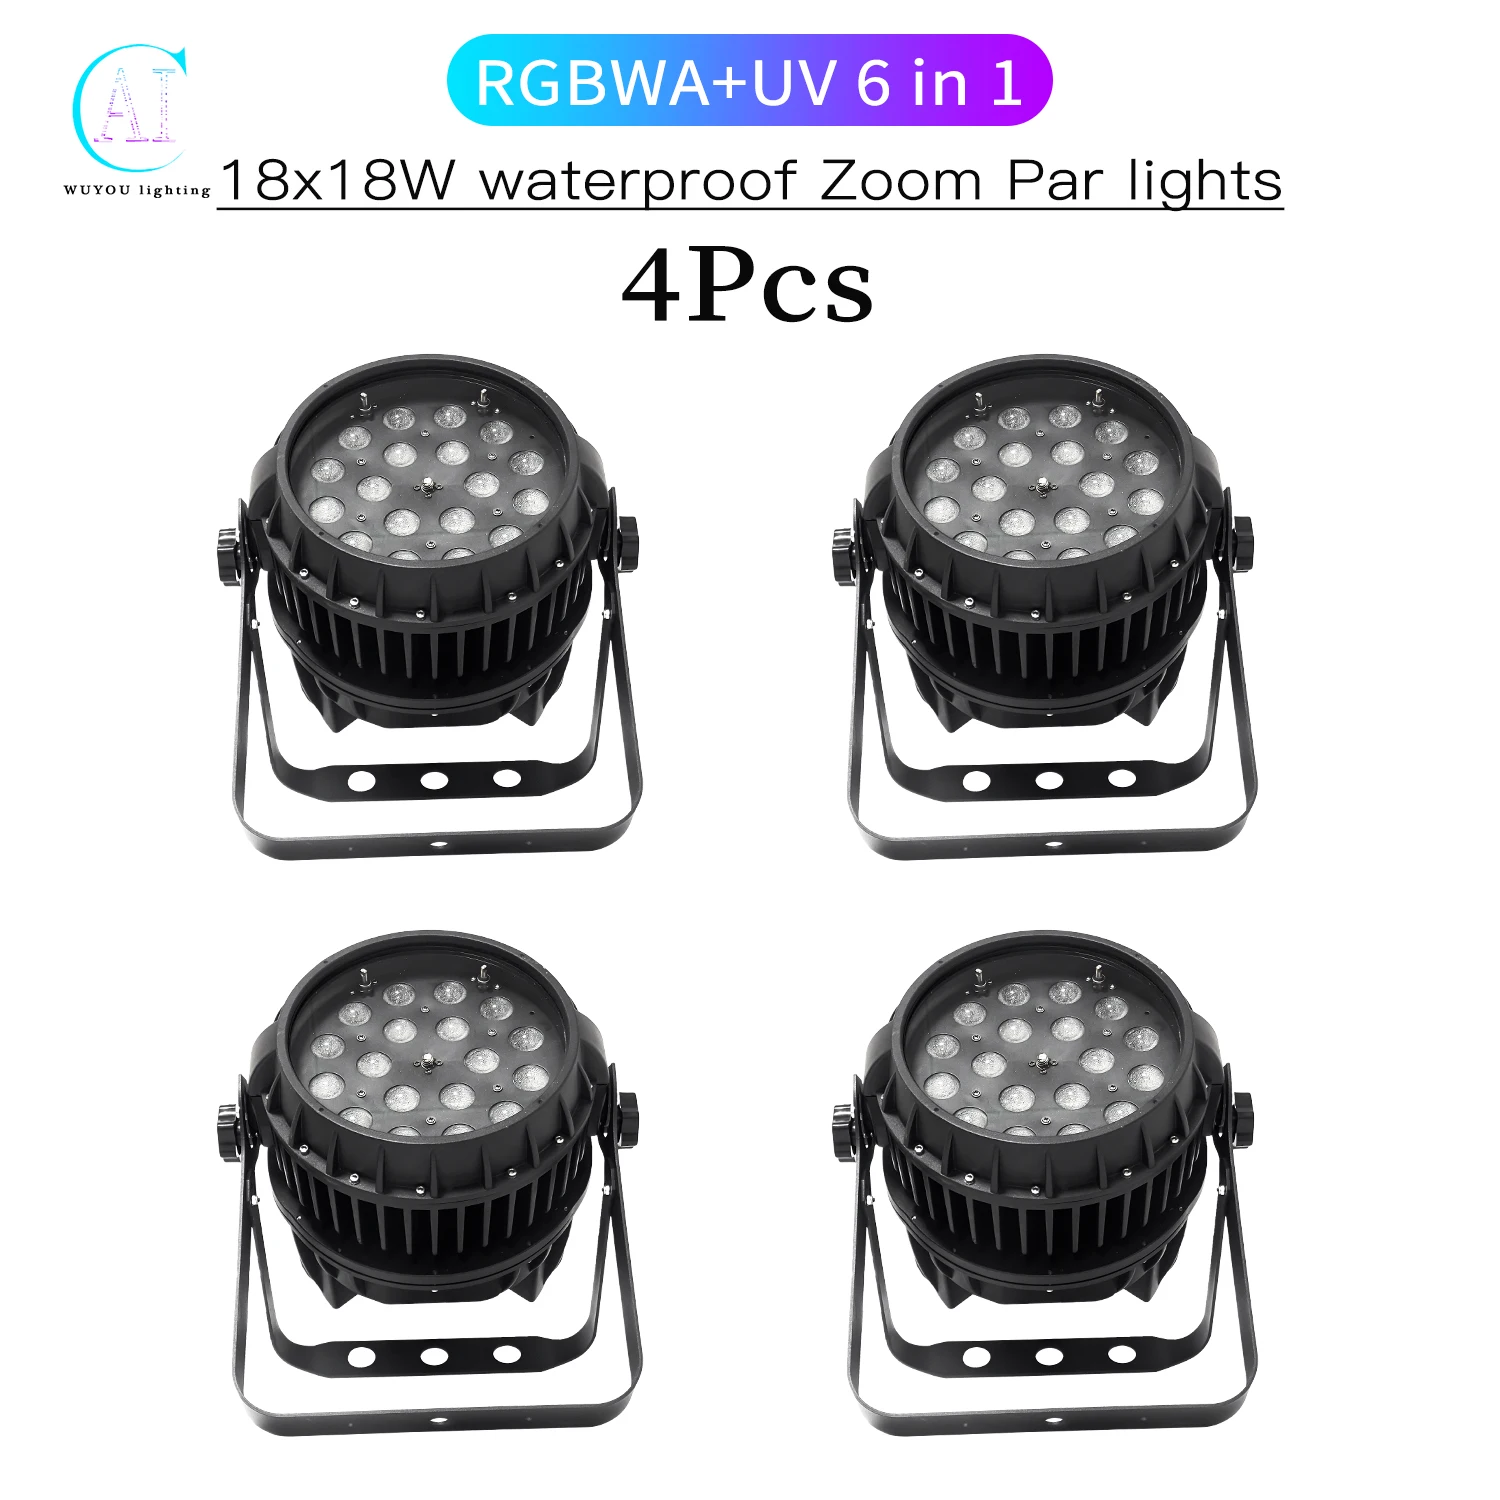 

4Pcs/Lots 18x12W RGBW/18x18WRGBWA UV 6 in 1 LED Waterproof Zoom Par Light DMX Control DJ Disco Outdoor Show Stage Lighting